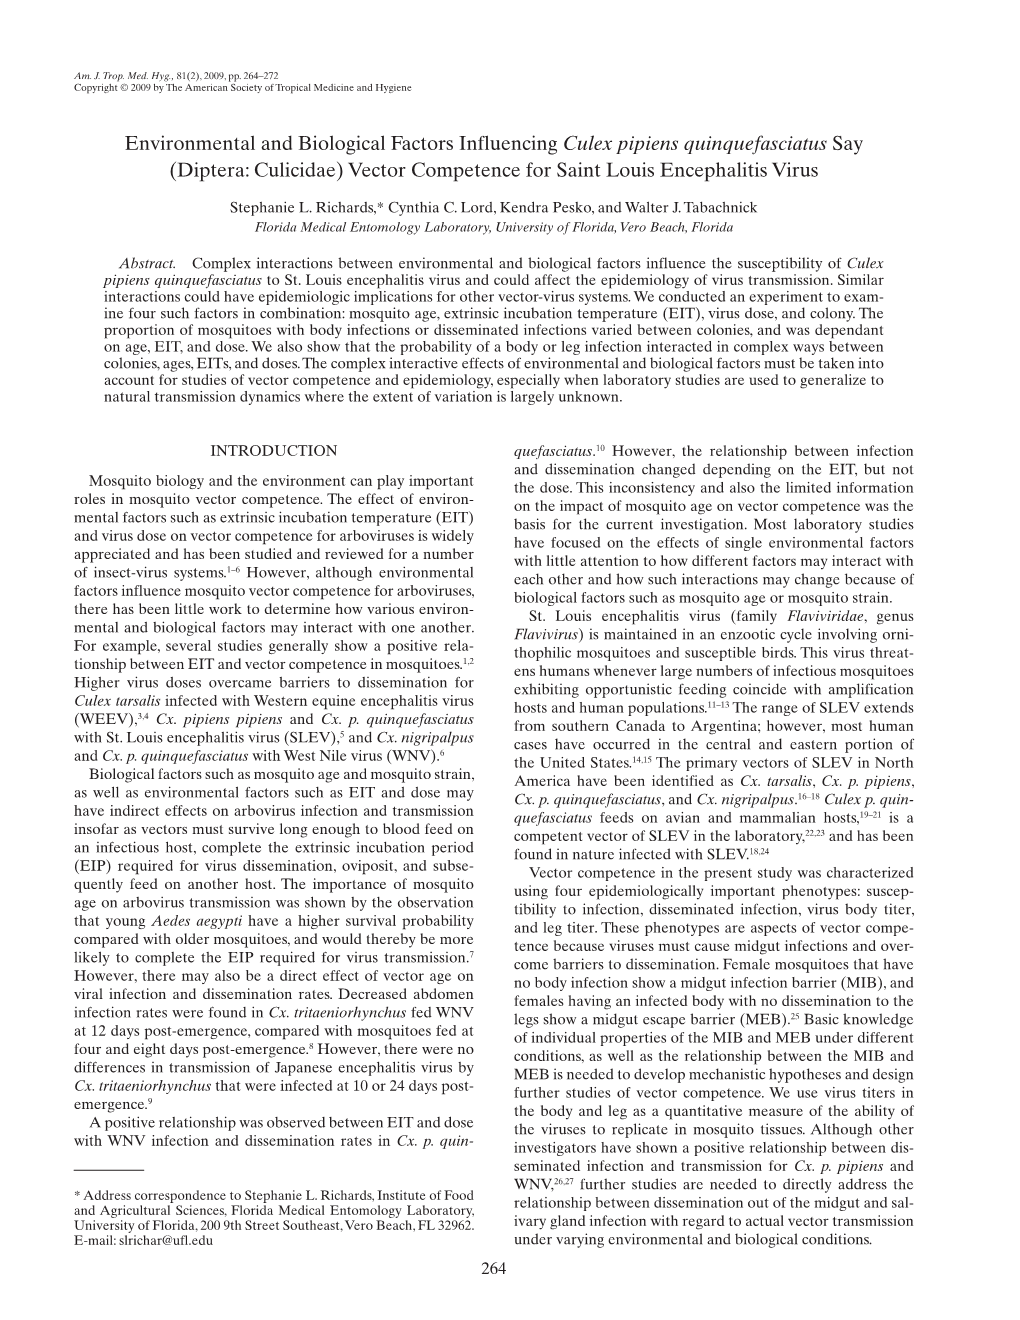 Environmental and Biological Factors Influencing Culex Pipiens Quinquefasciatus Say (Diptera: Culicidae) Vector Competence for Saint Louis Encephalitis Virus